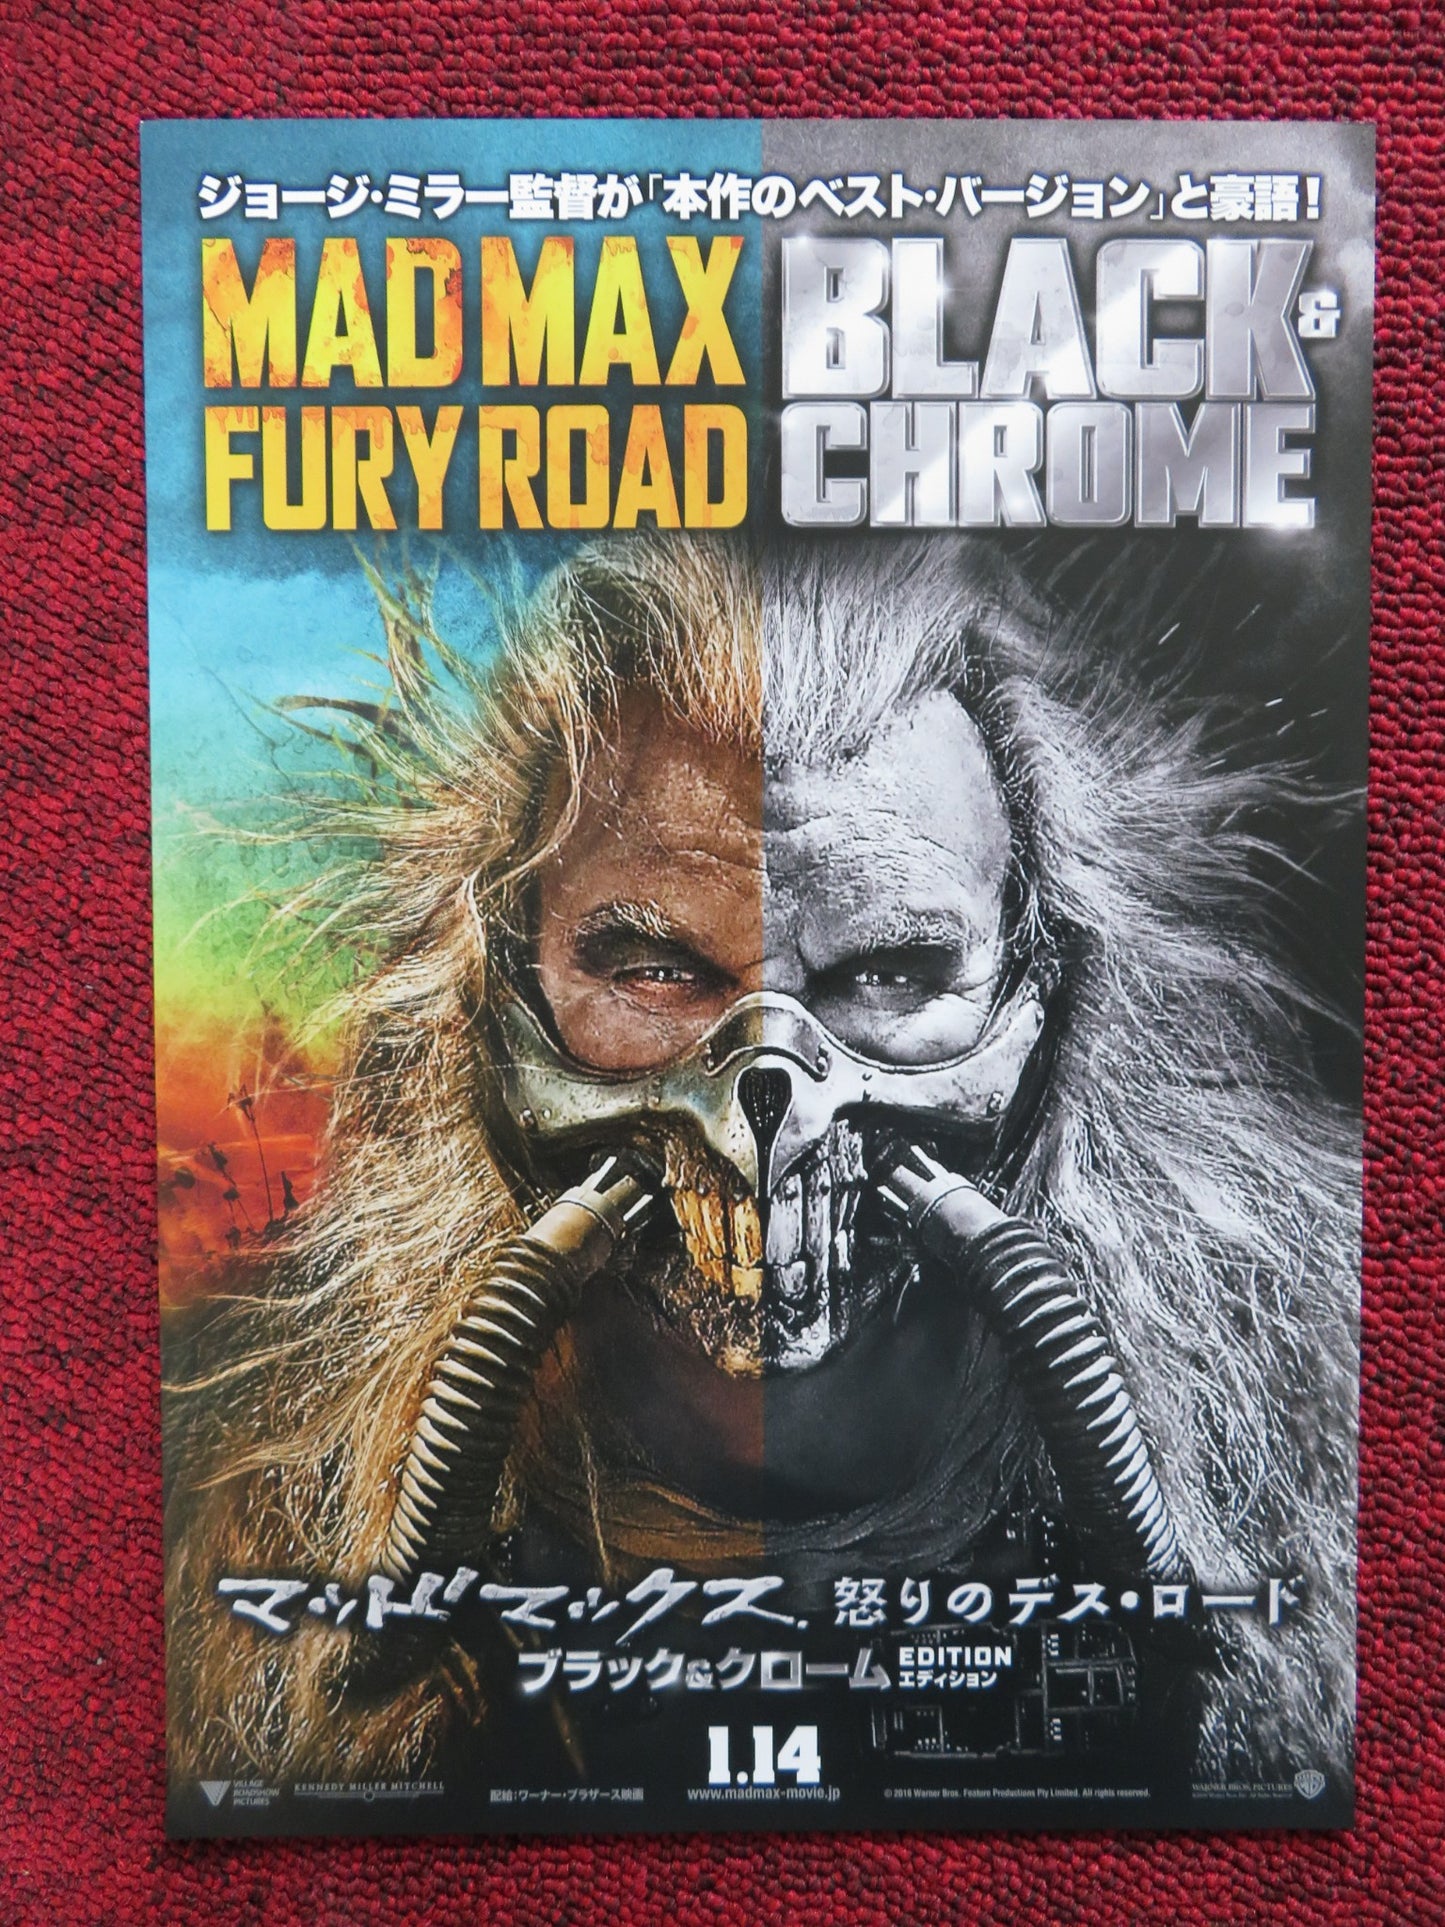 dark fury movie poster